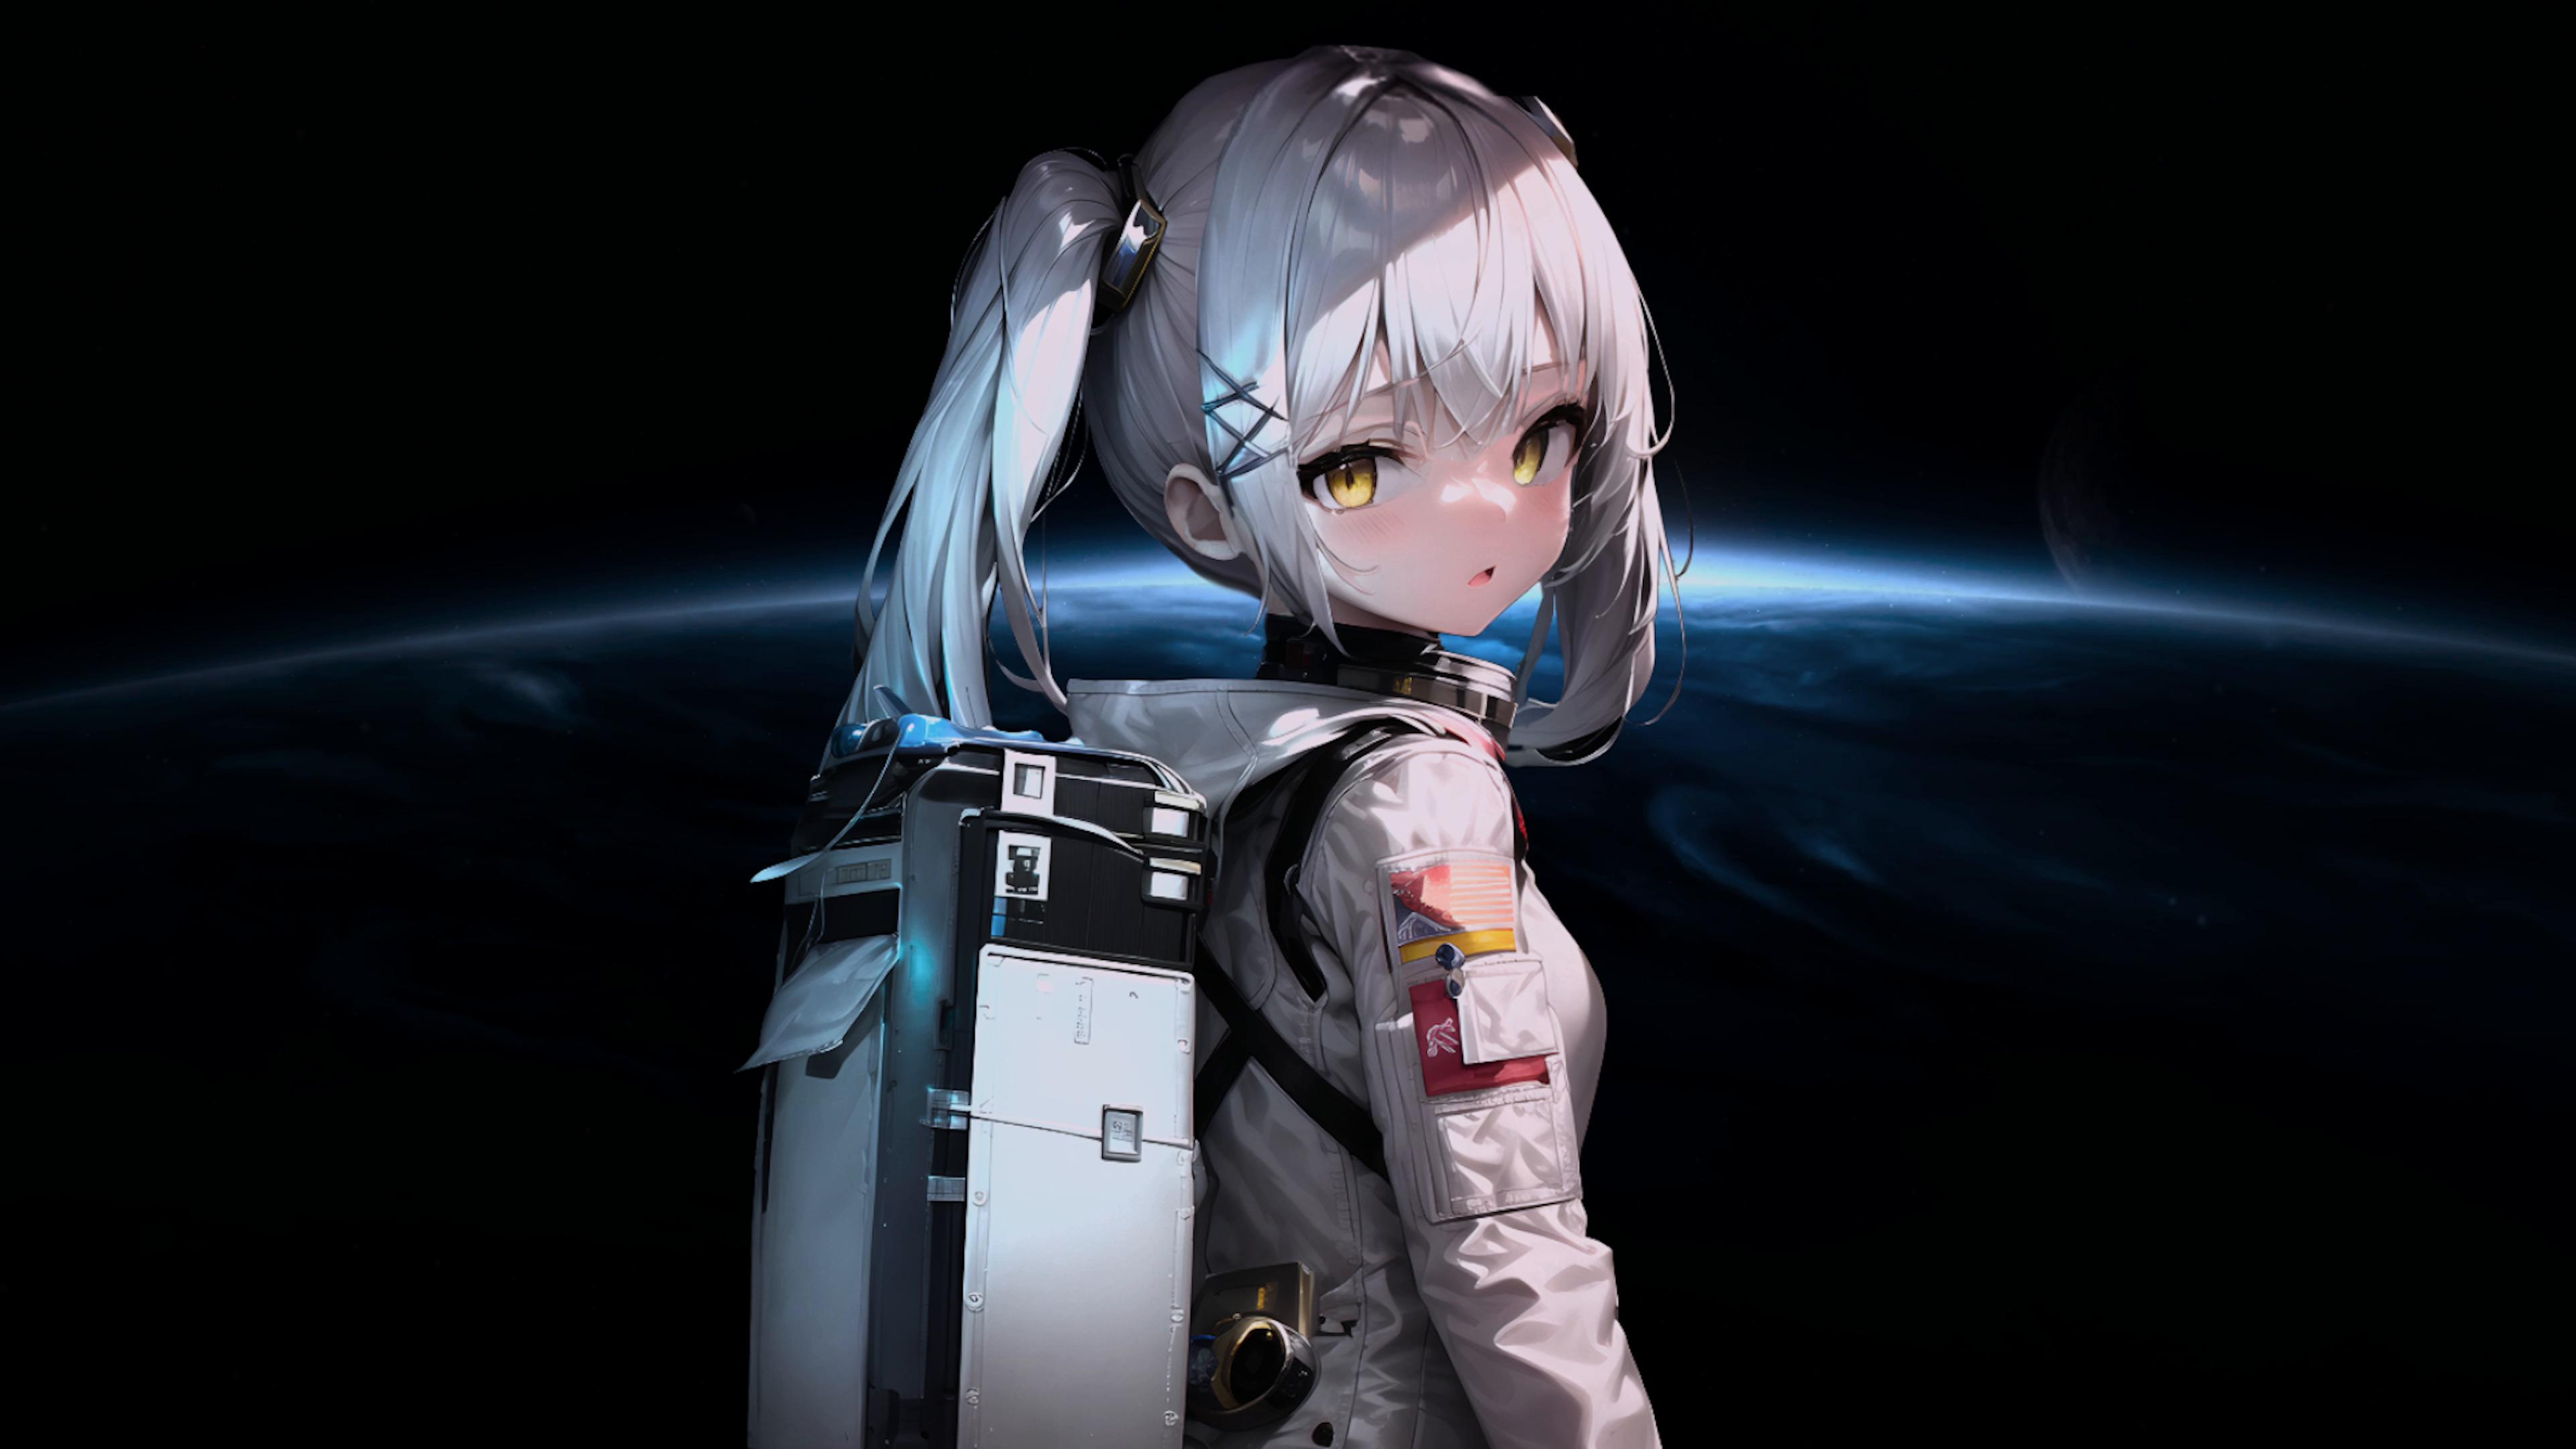 Astronaut Anime Girl Live Wallpaper